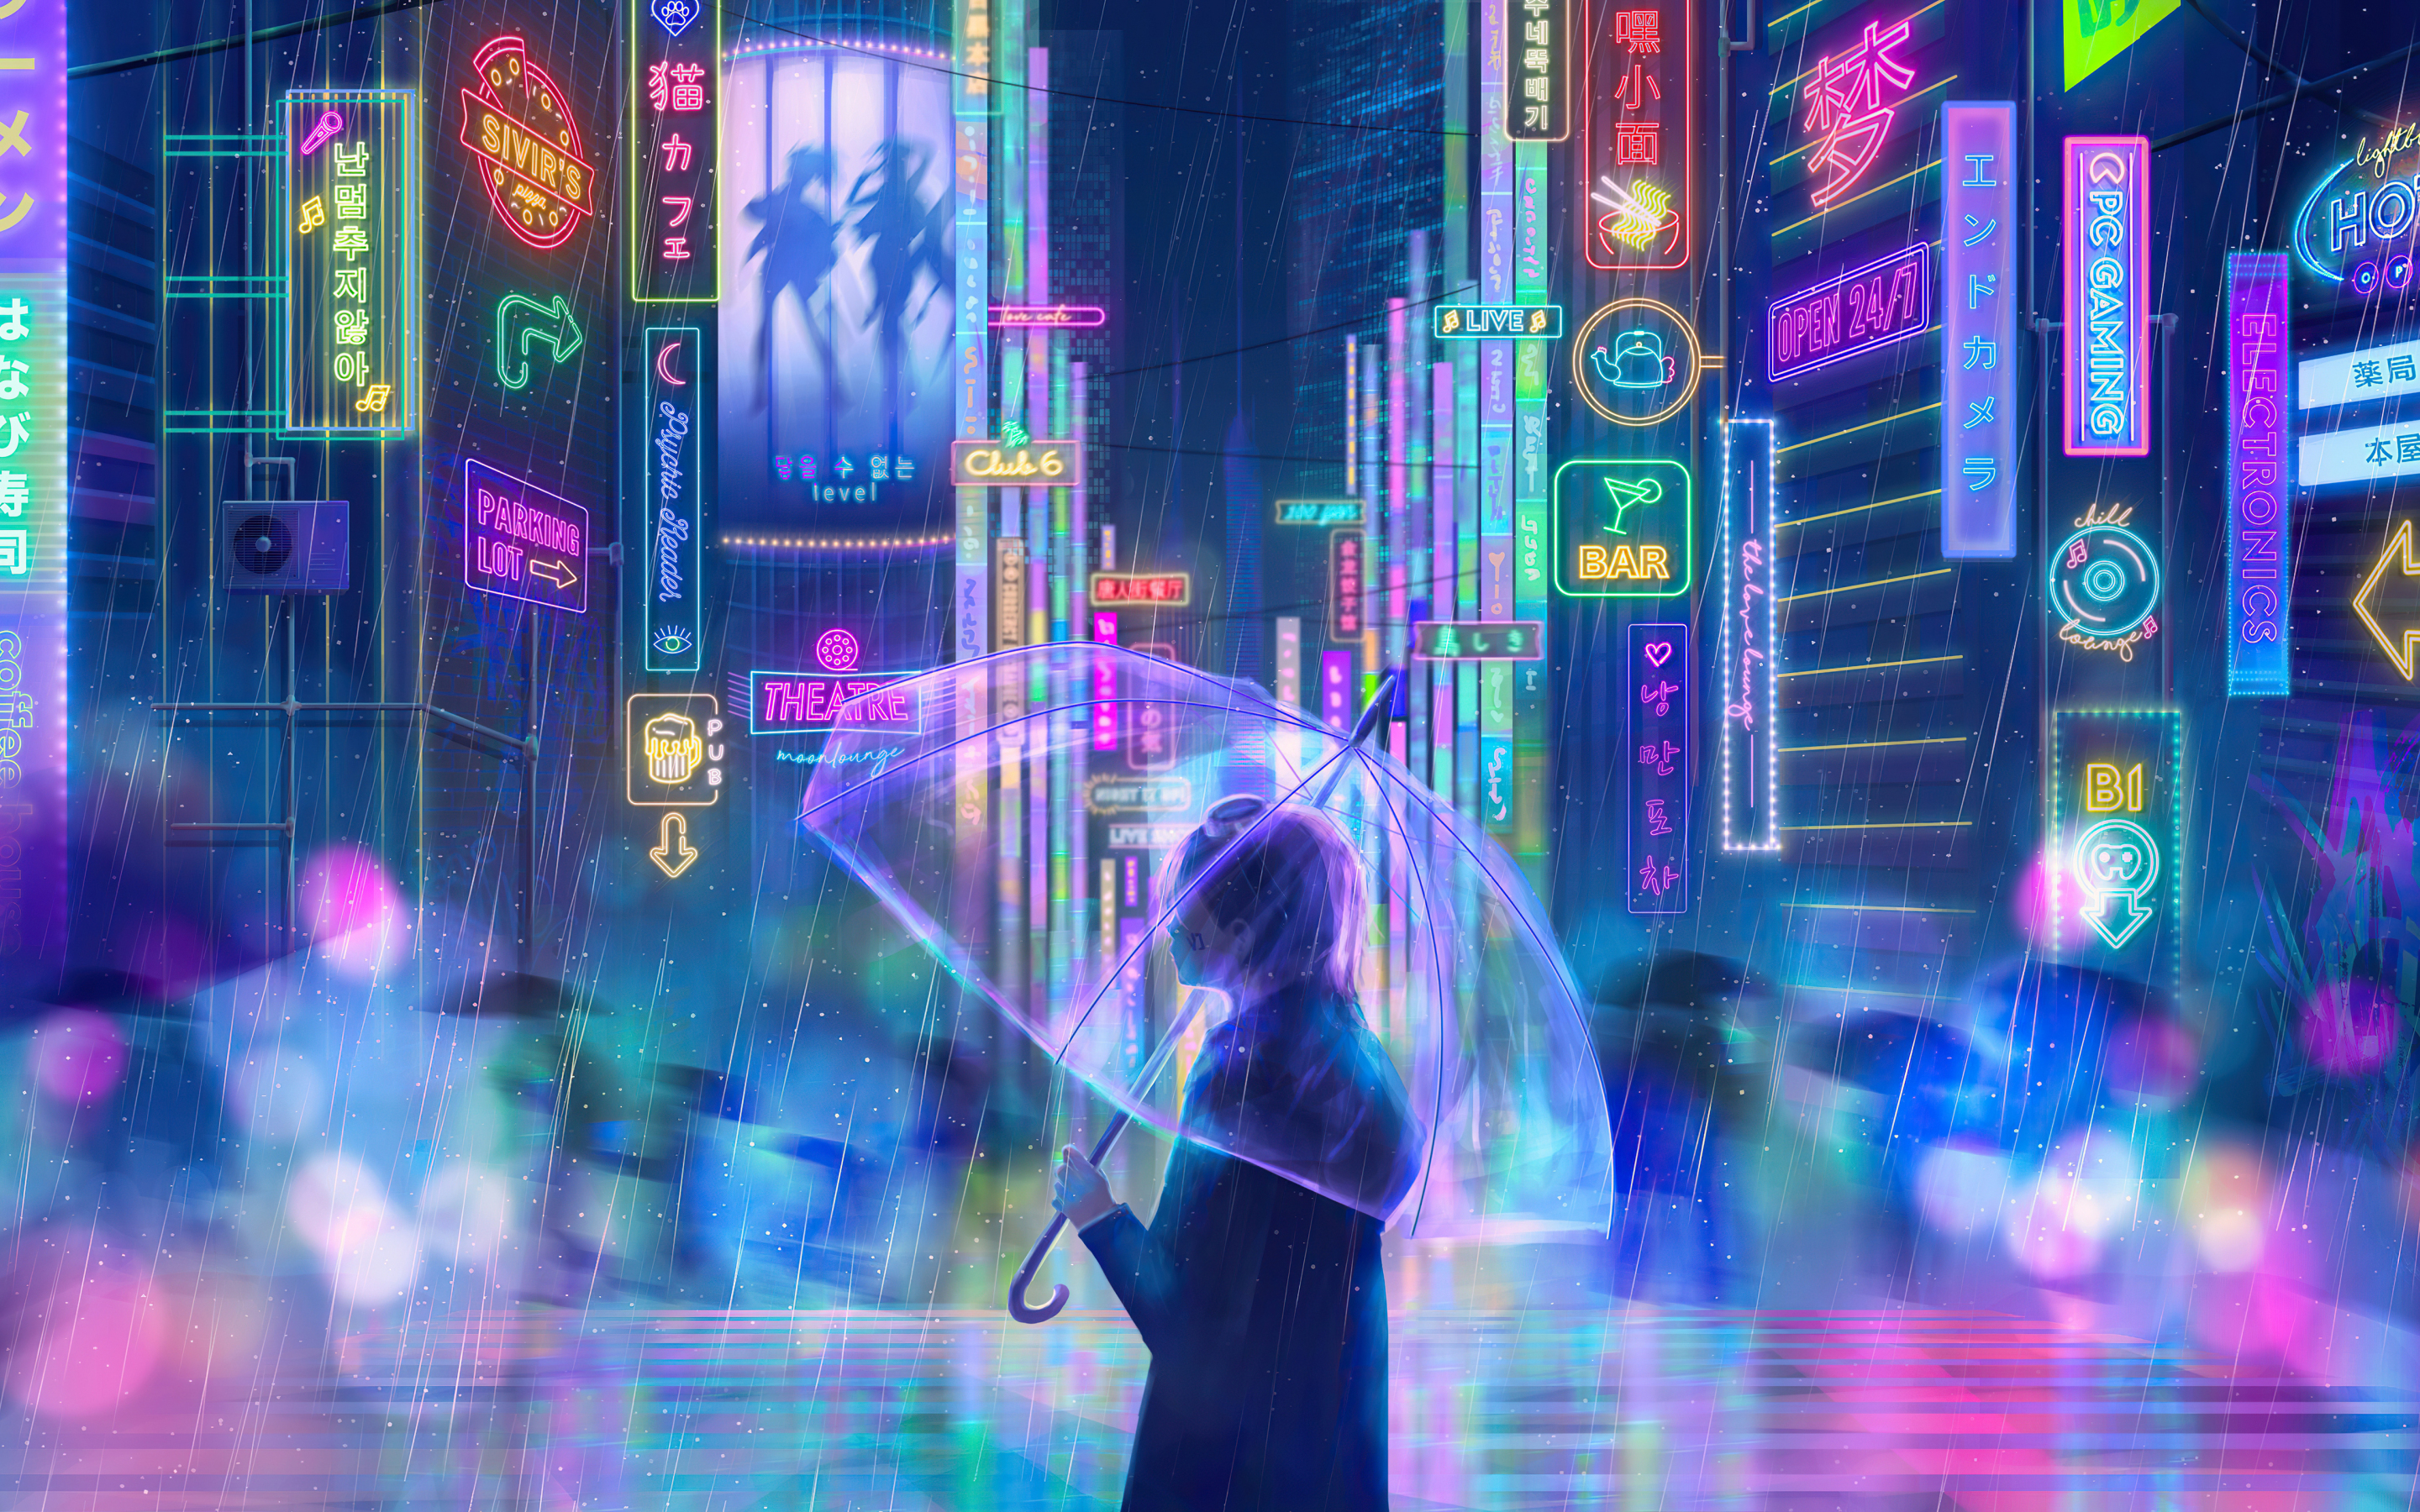 Glowing city, neon, girl with umbrella, original, artwork, 2880x1800 wallpaper